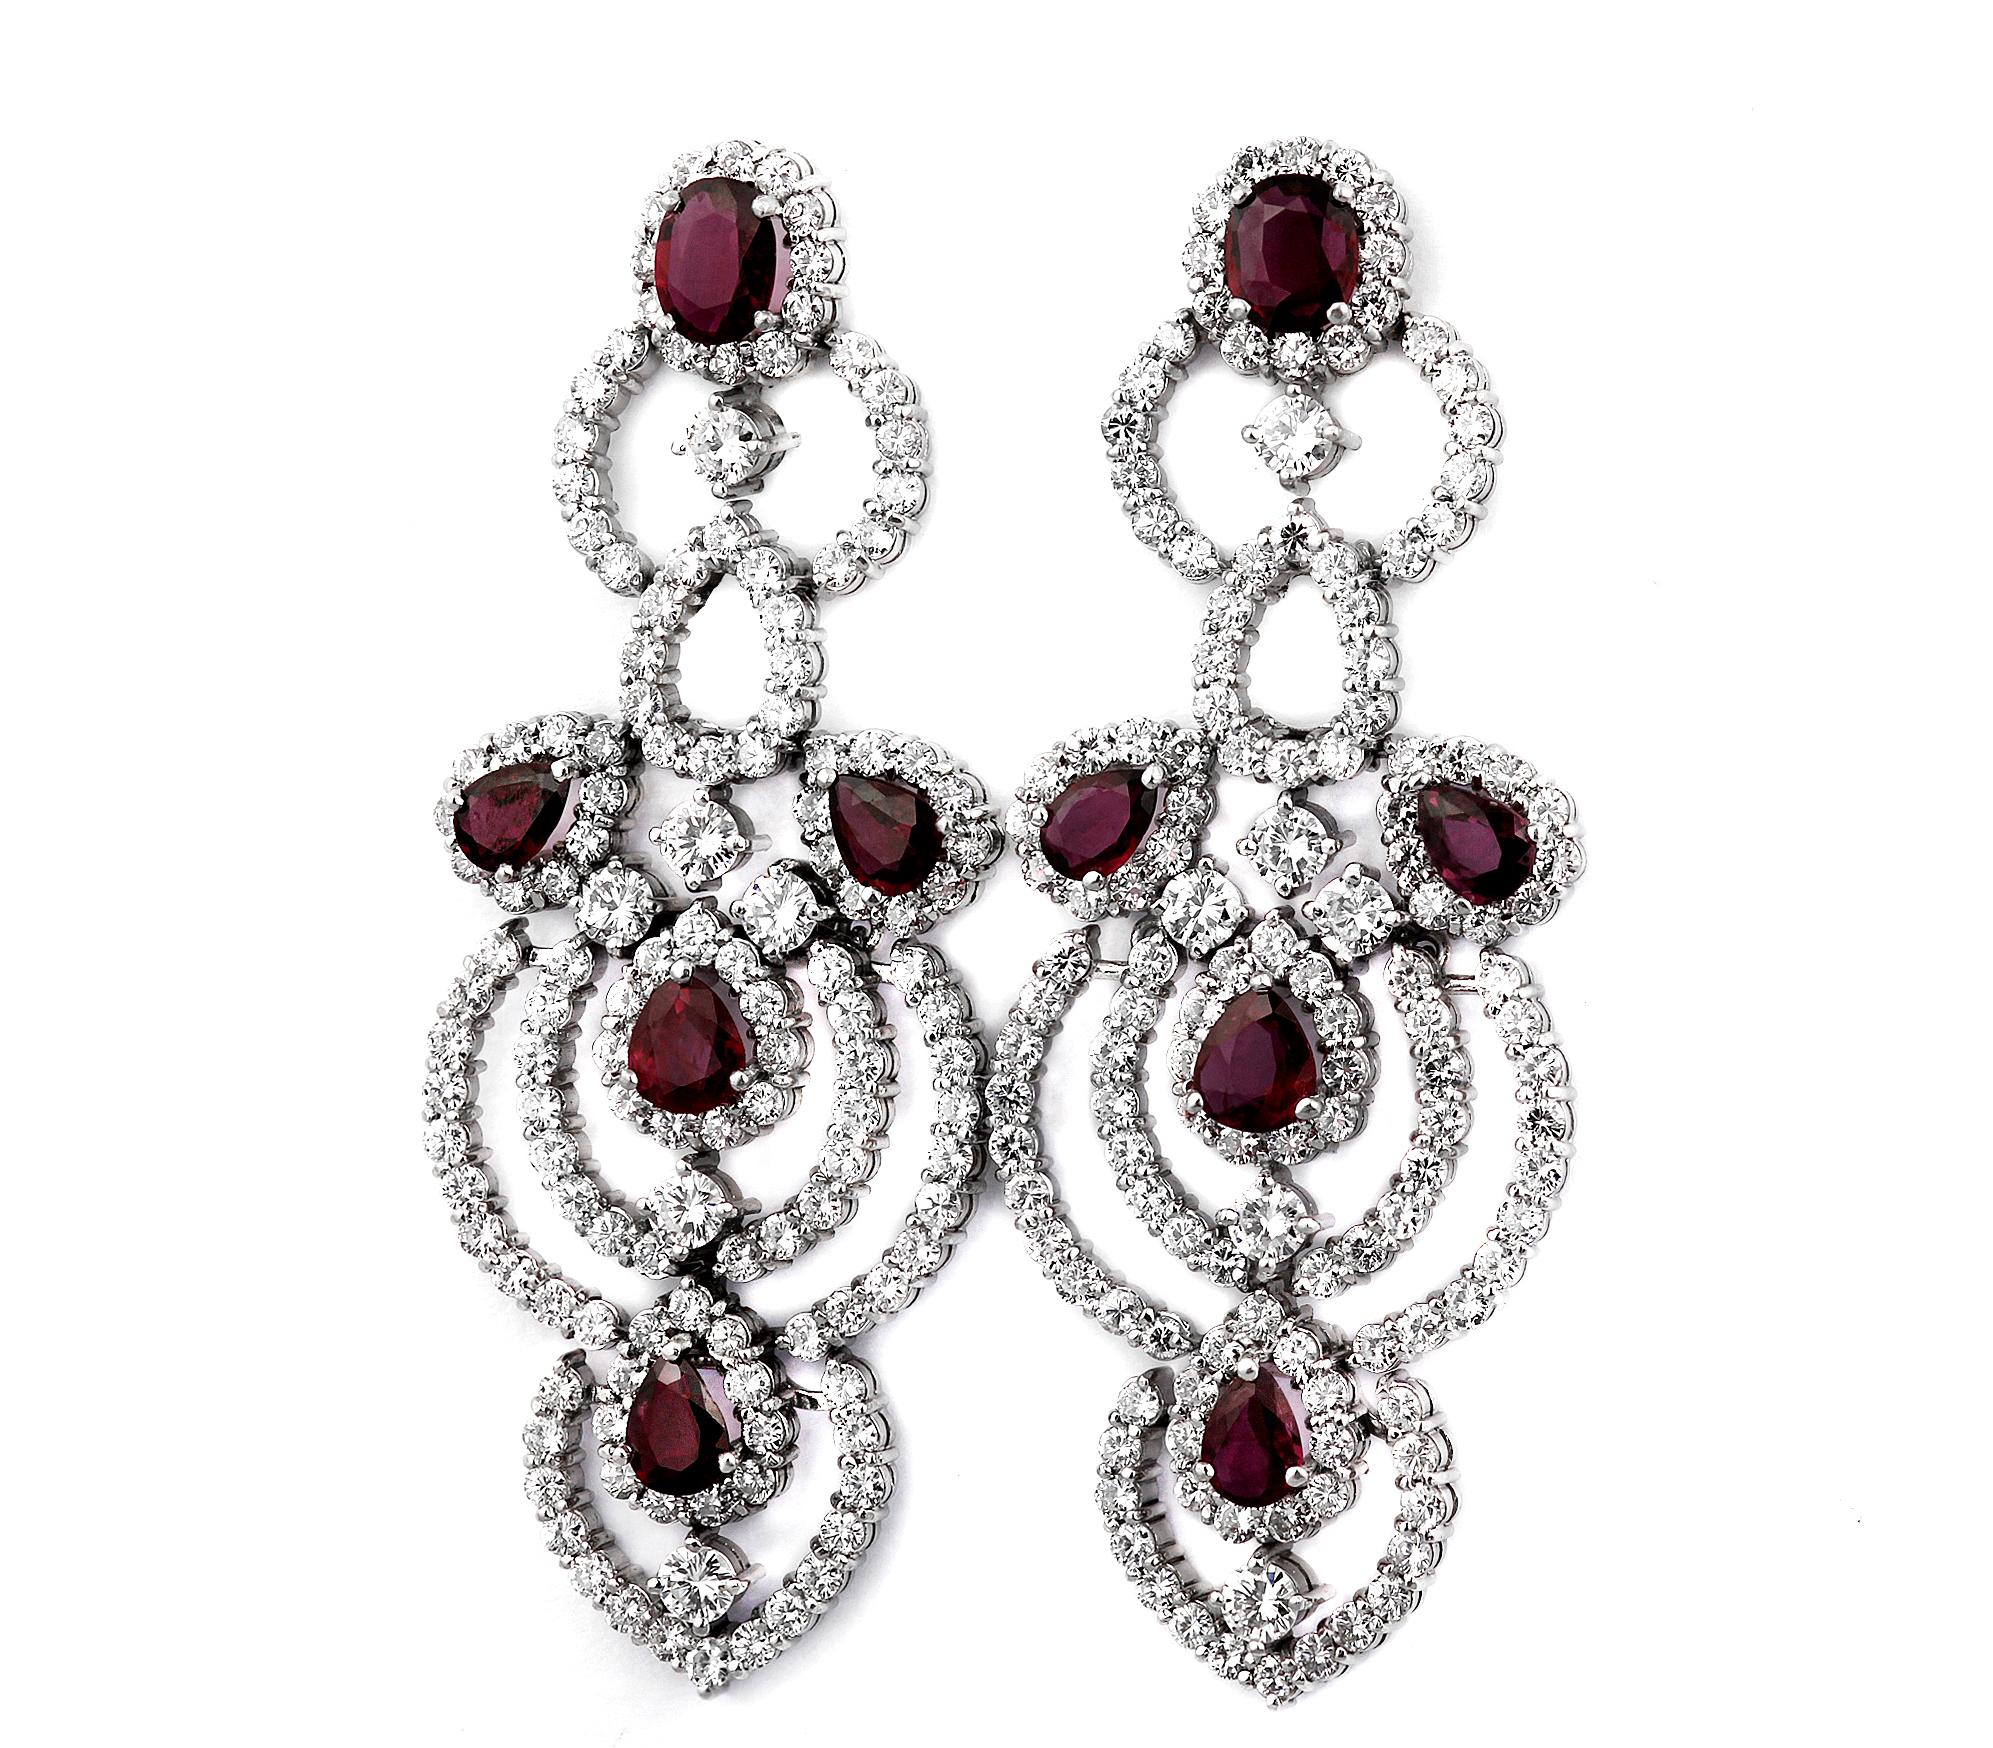 Brilliant Cut Retro Pair of Ruby & Diamond Drop/Chandelier Earrings in 18K White Gold